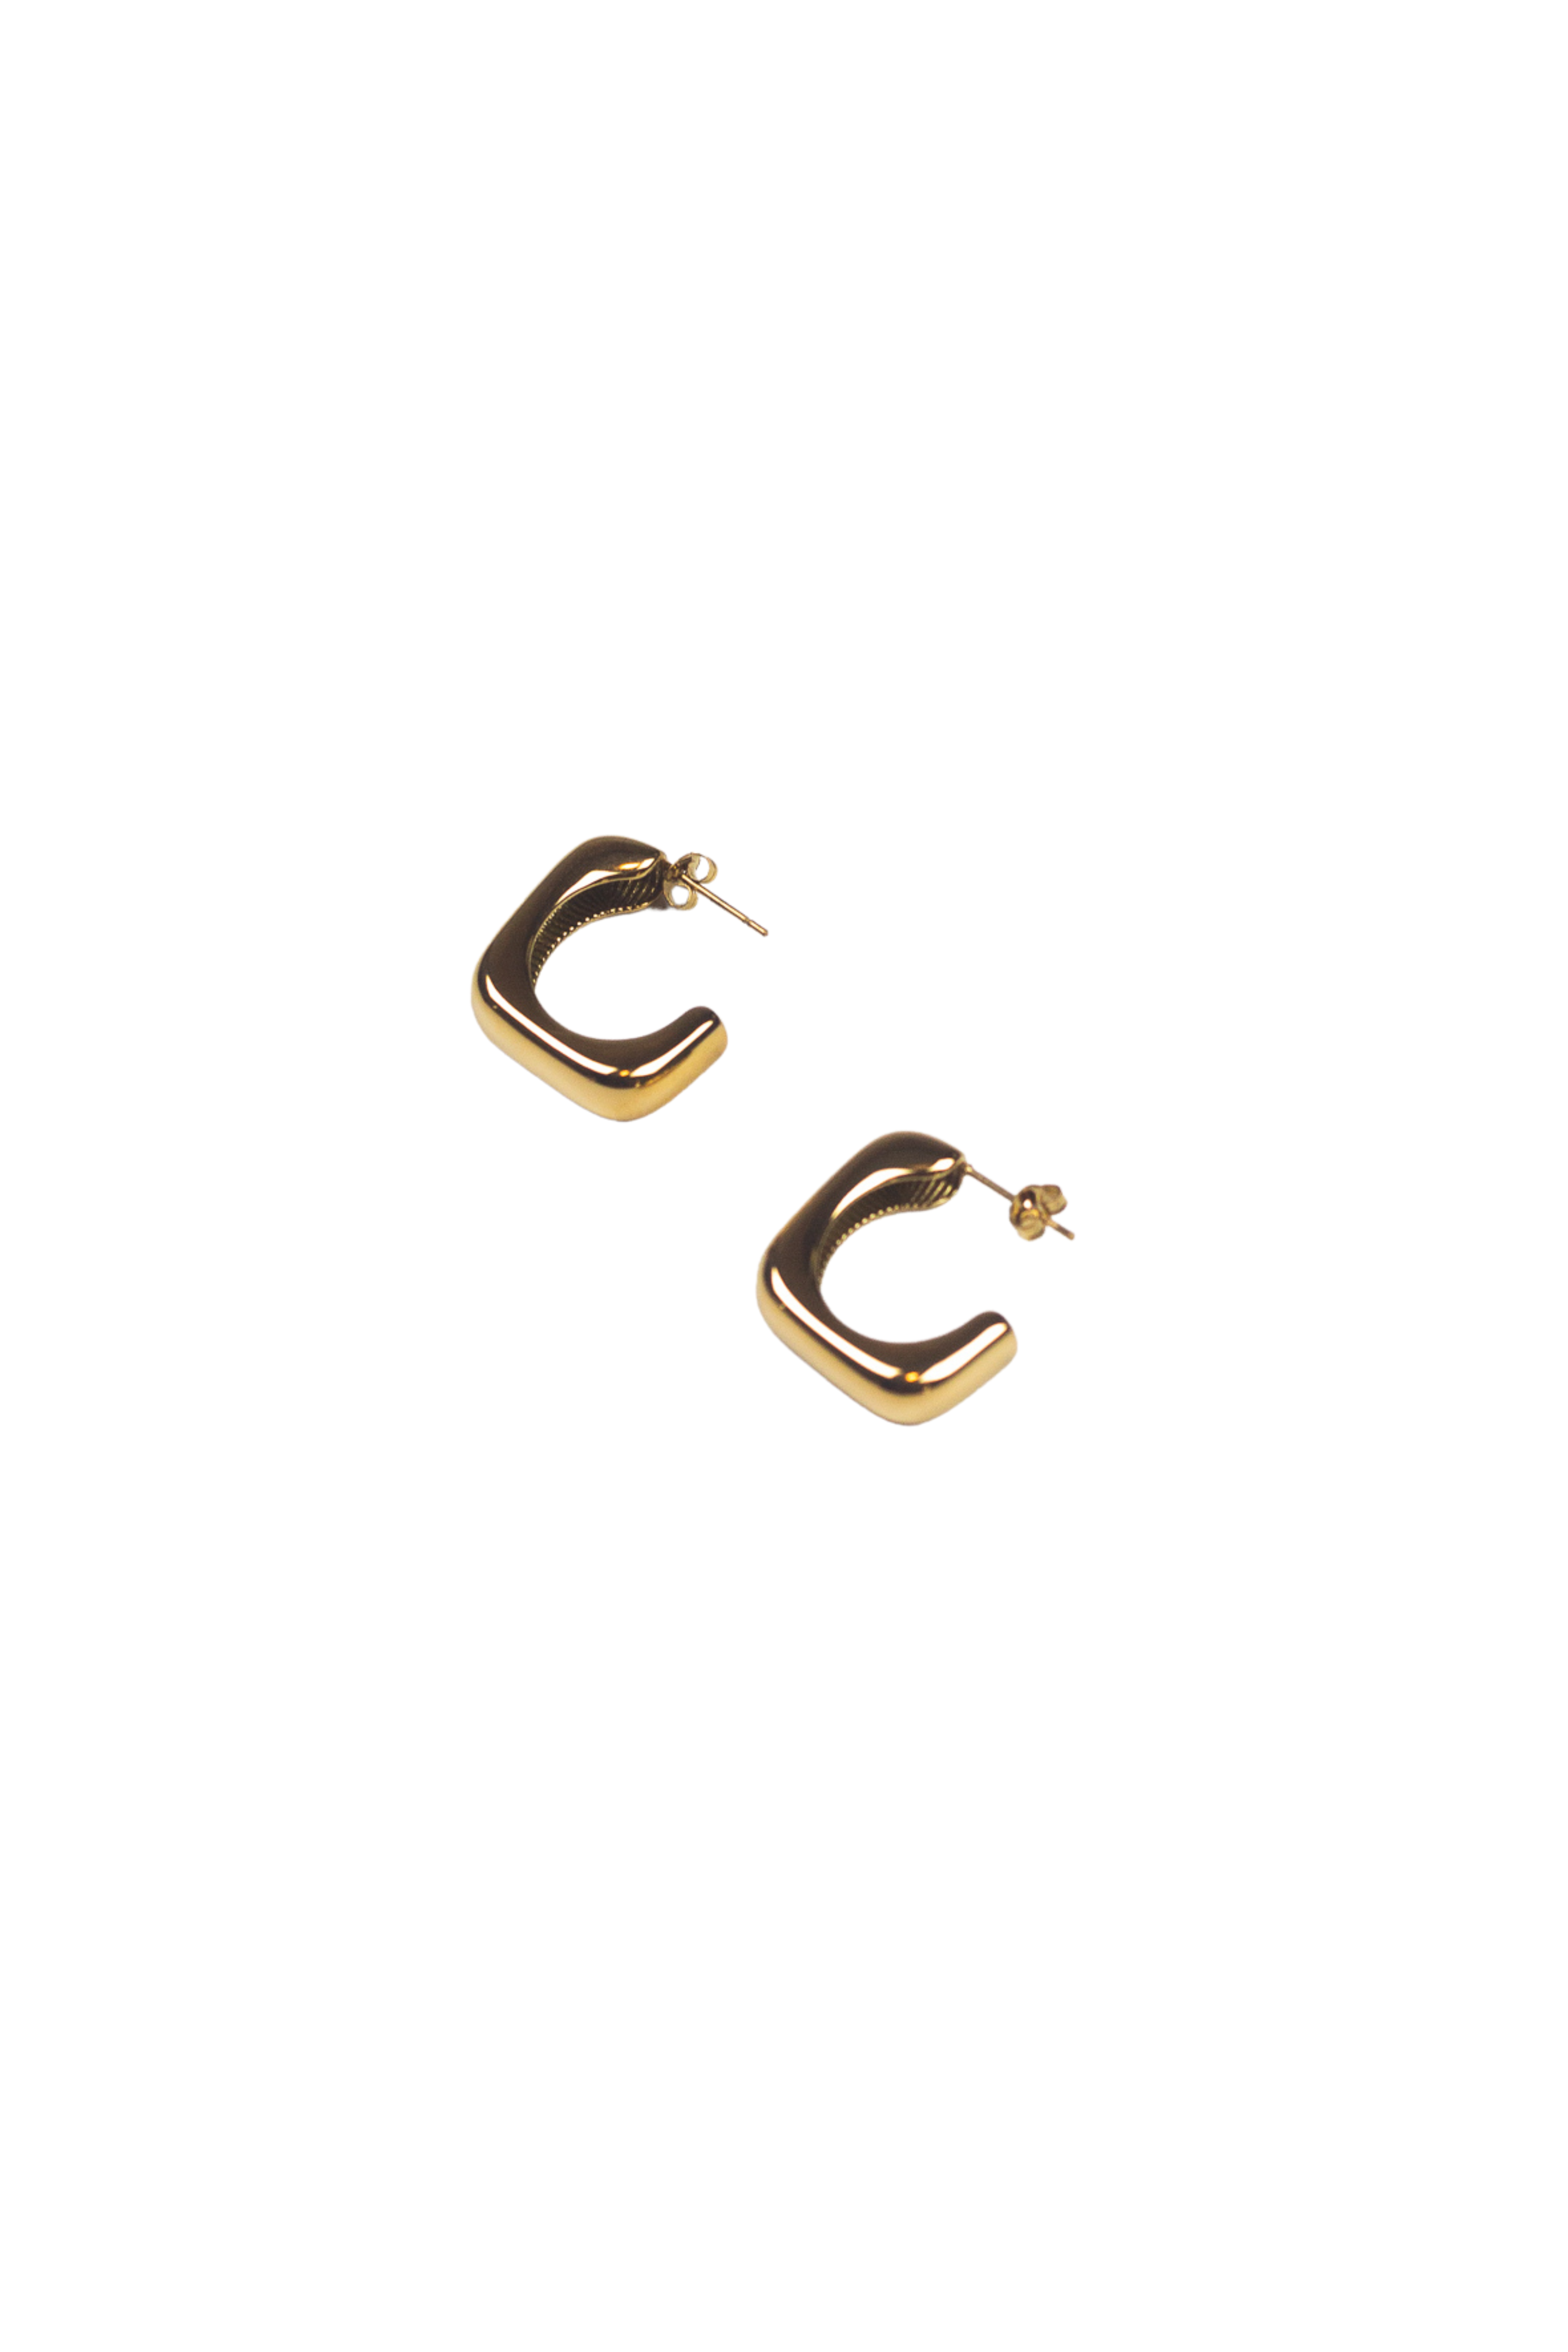 18k gold stainless steel hoop earrings. Named Angel Hoops by E's Element.